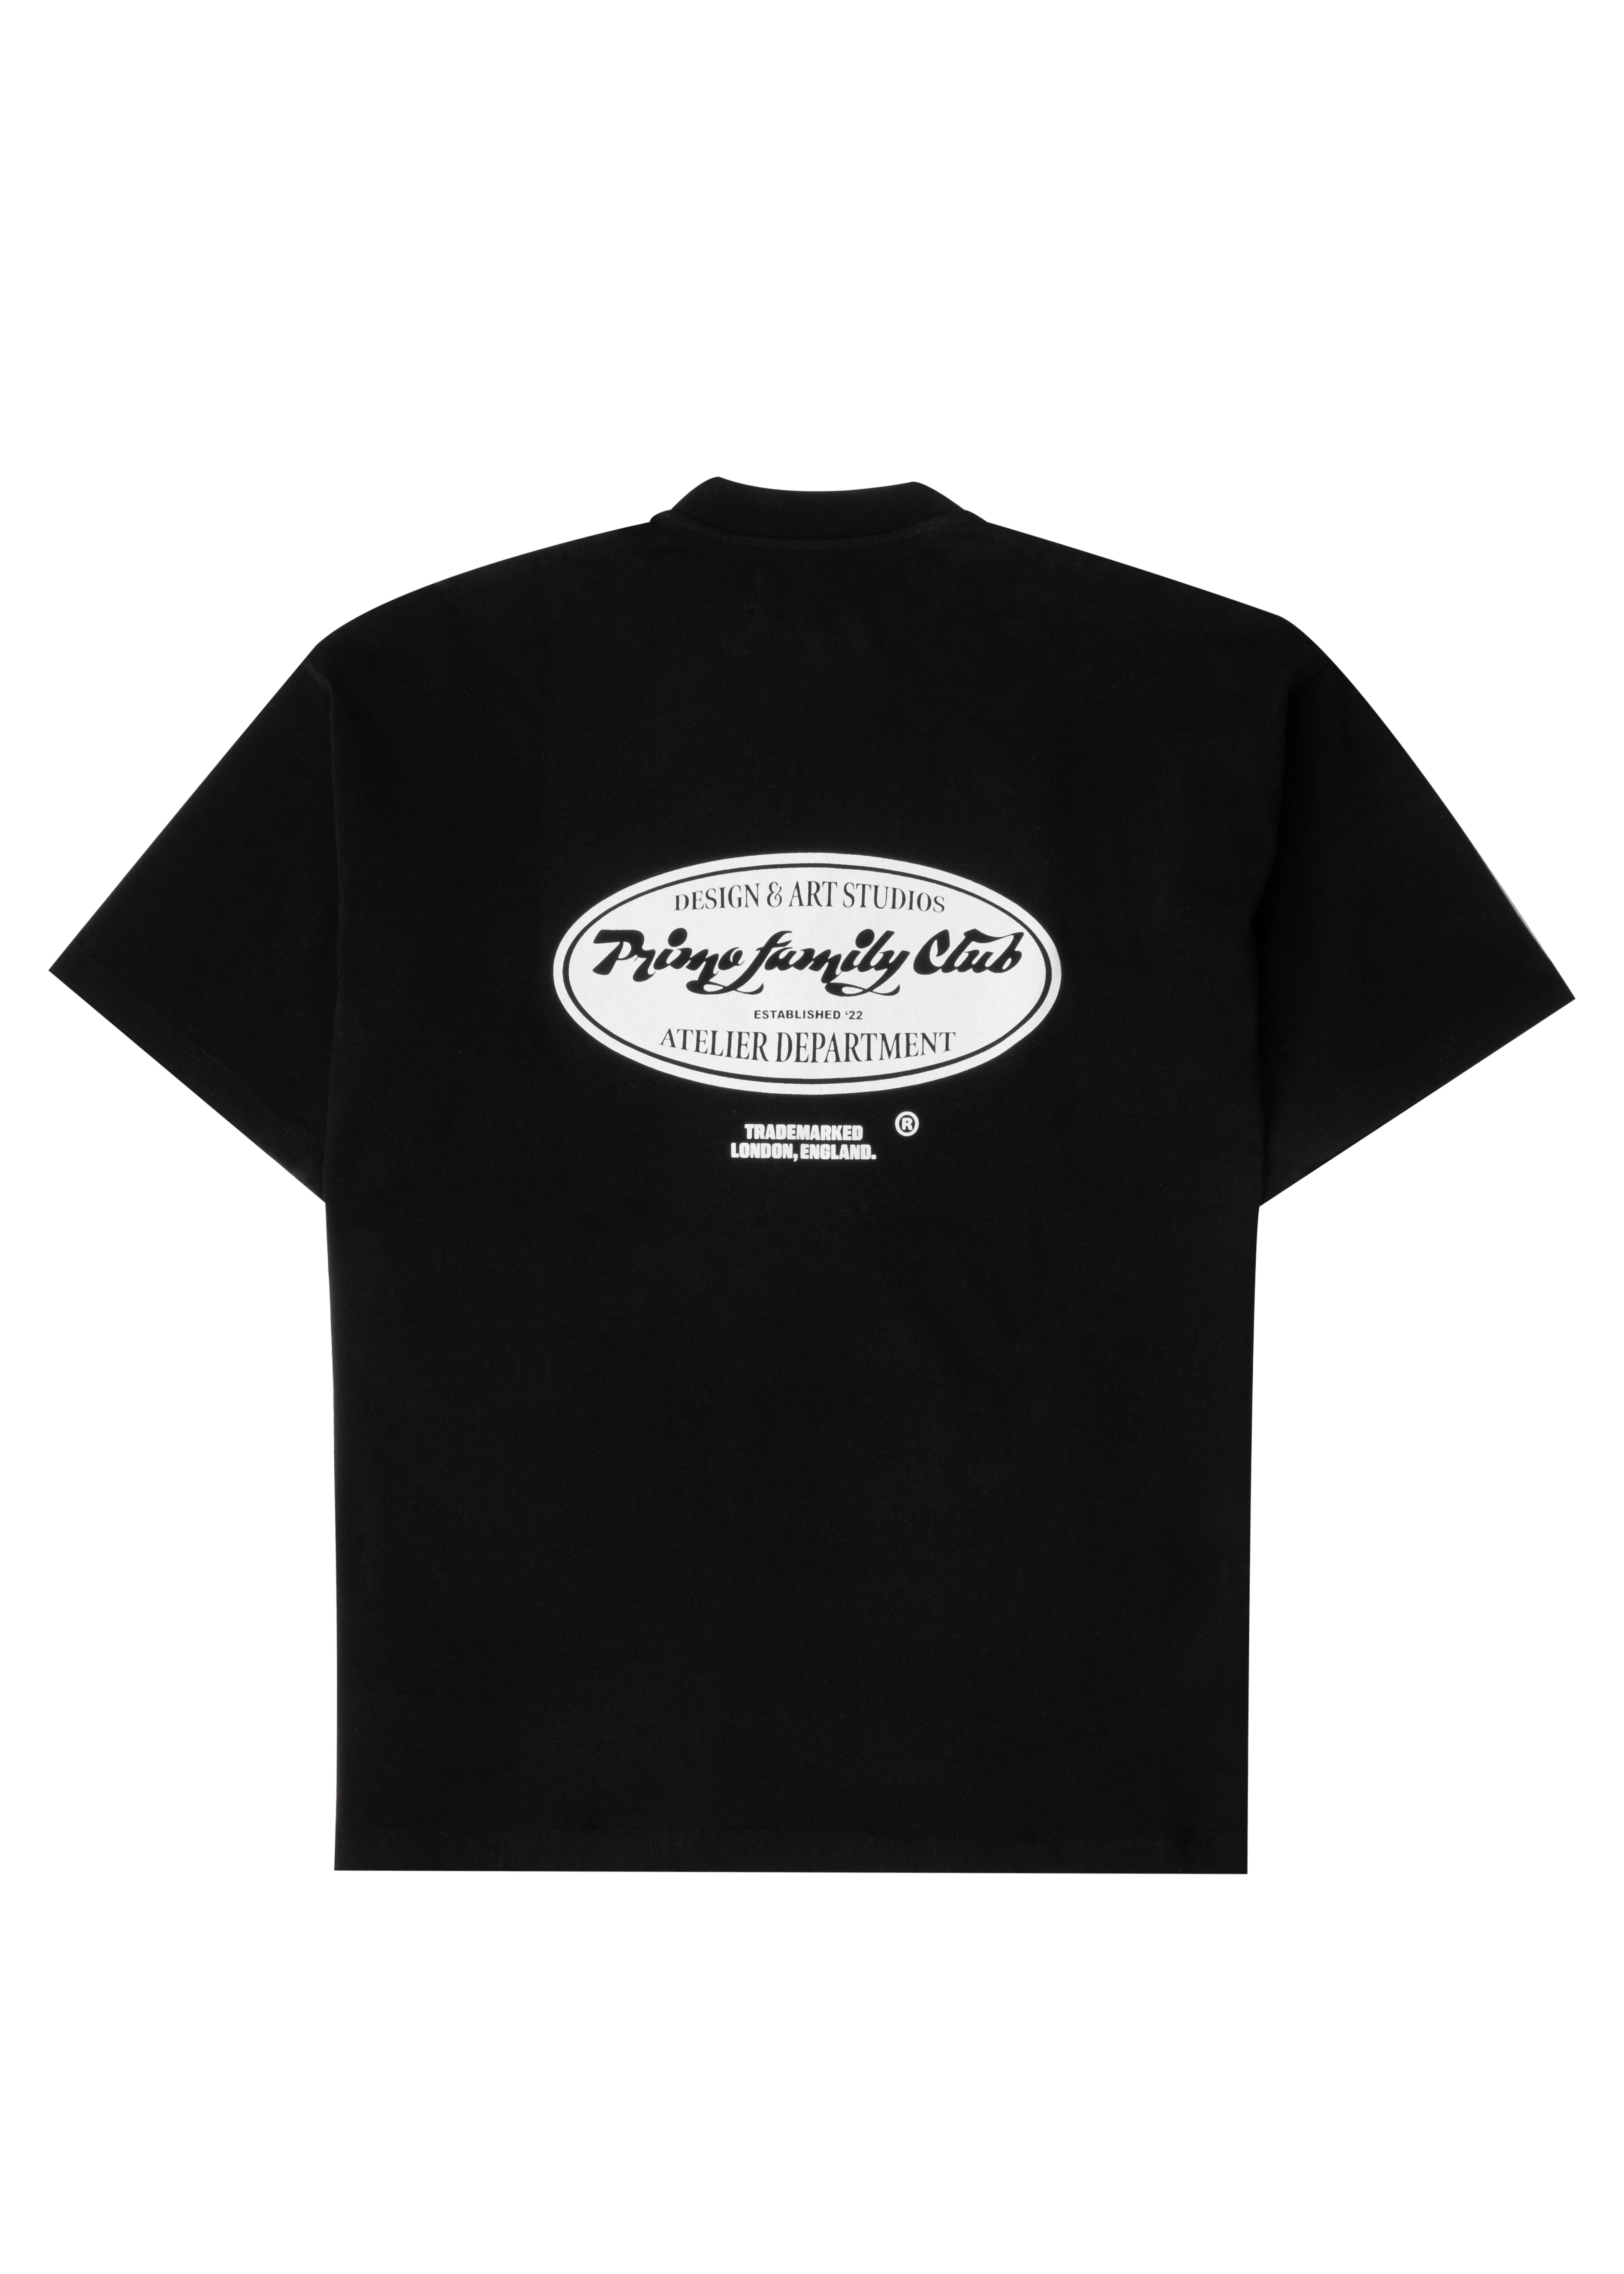 Black - Oval T-shirt